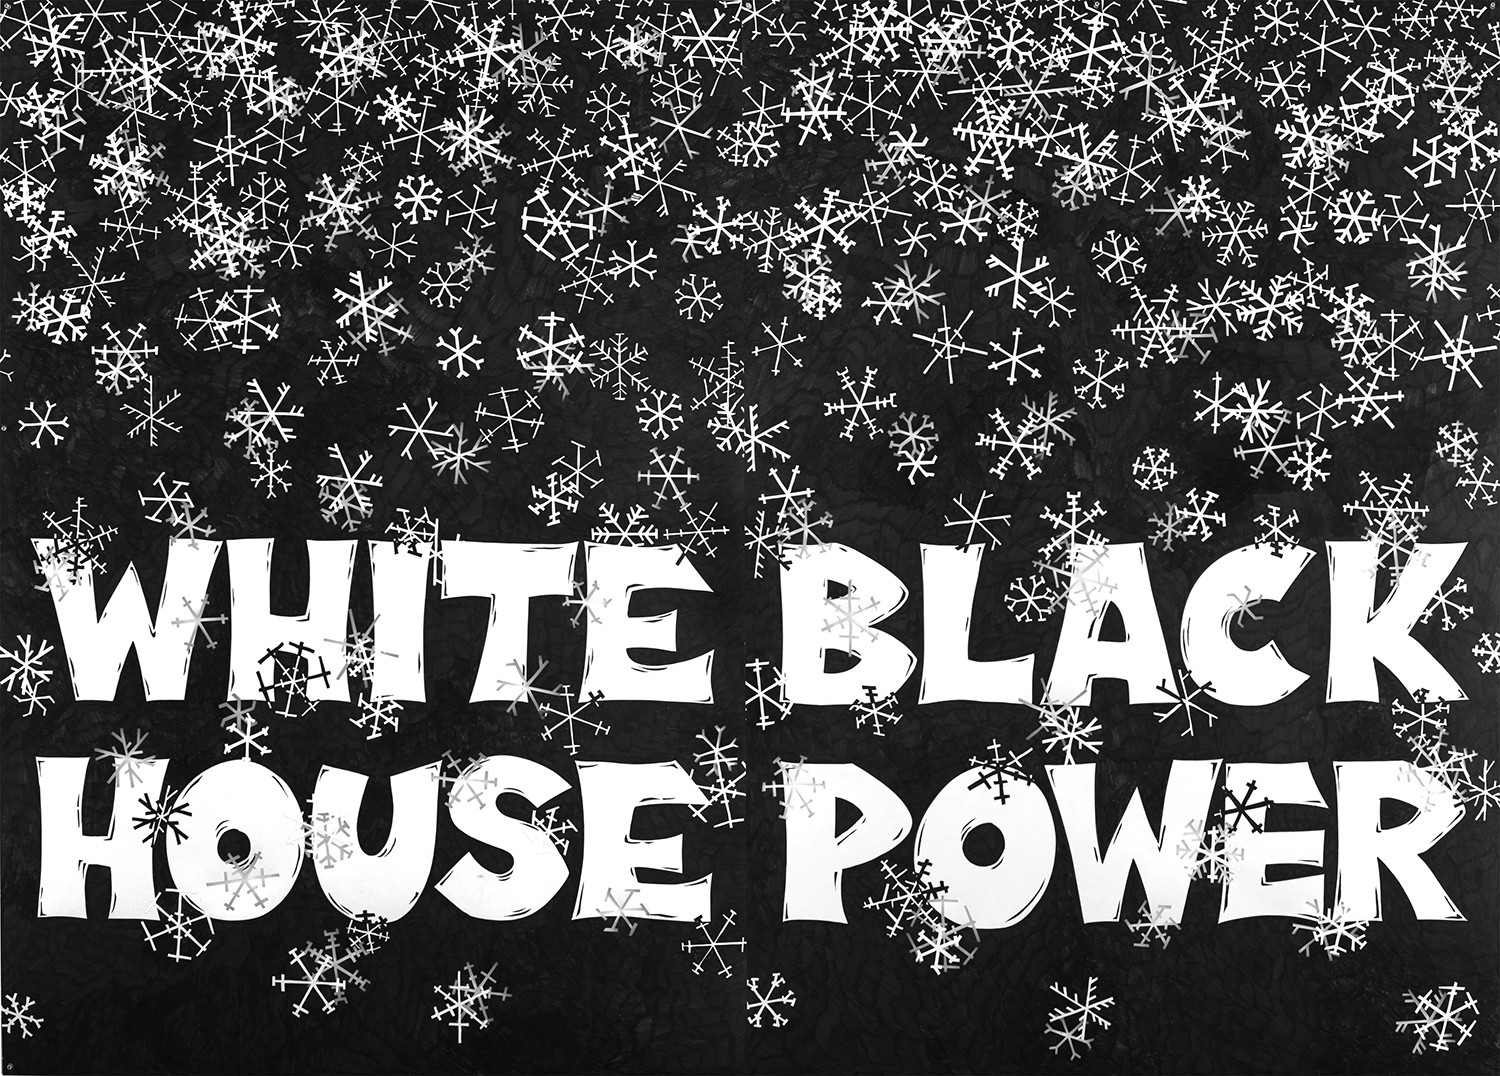 White House Black Power